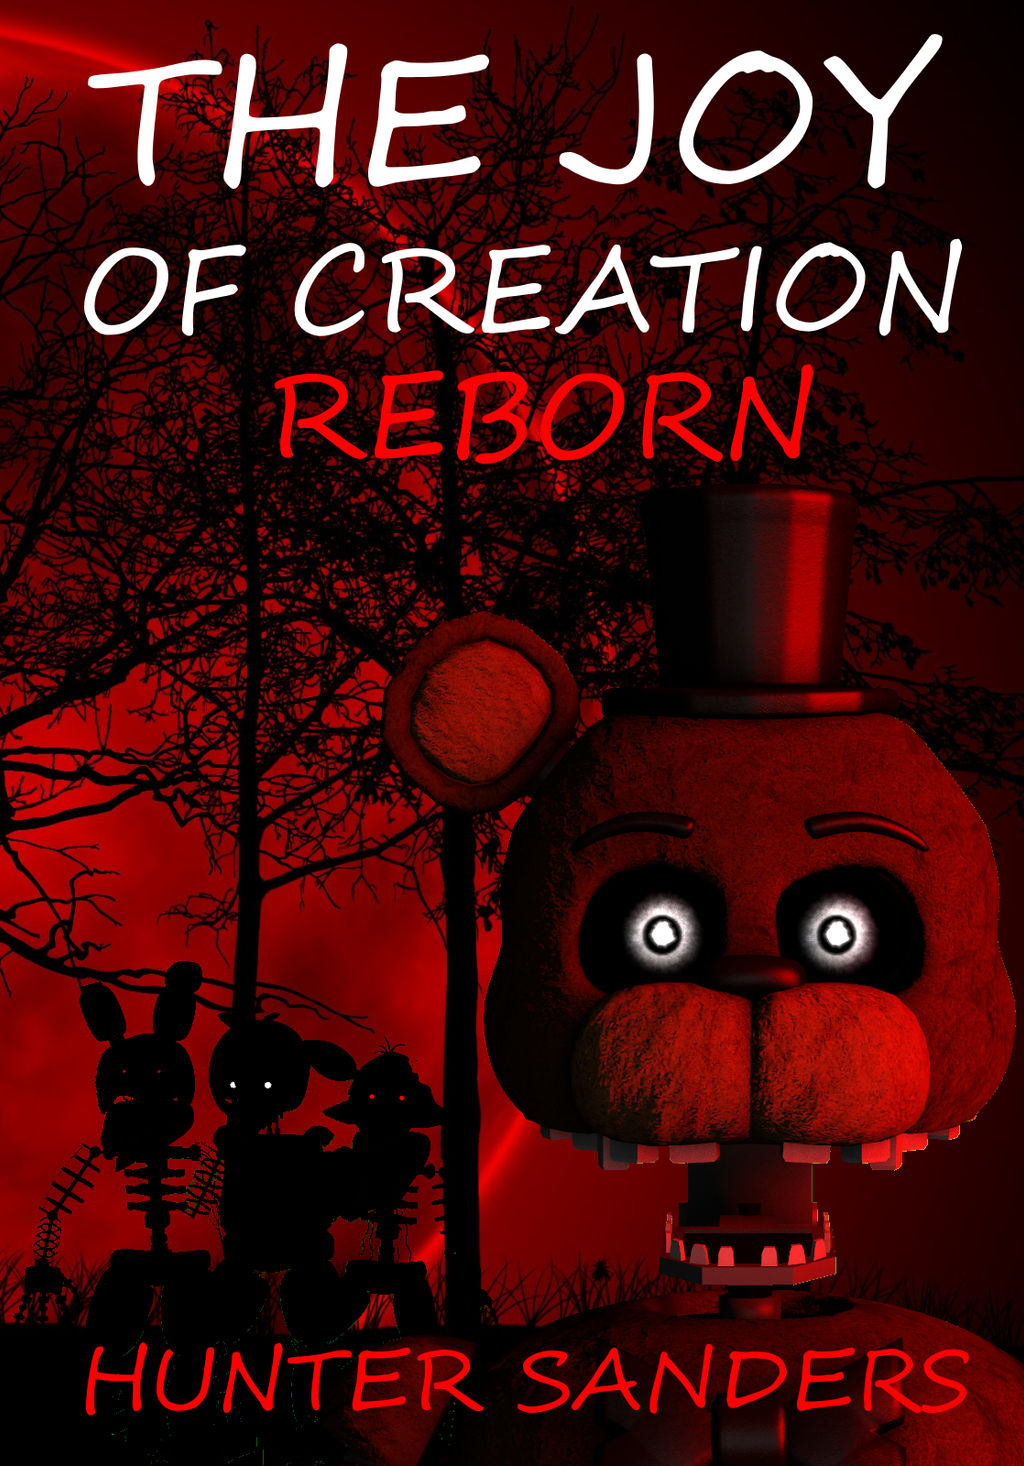 The Joy of Creation: Reborn - Ignited Freddy by DaHooplerzMan on DeviantArt